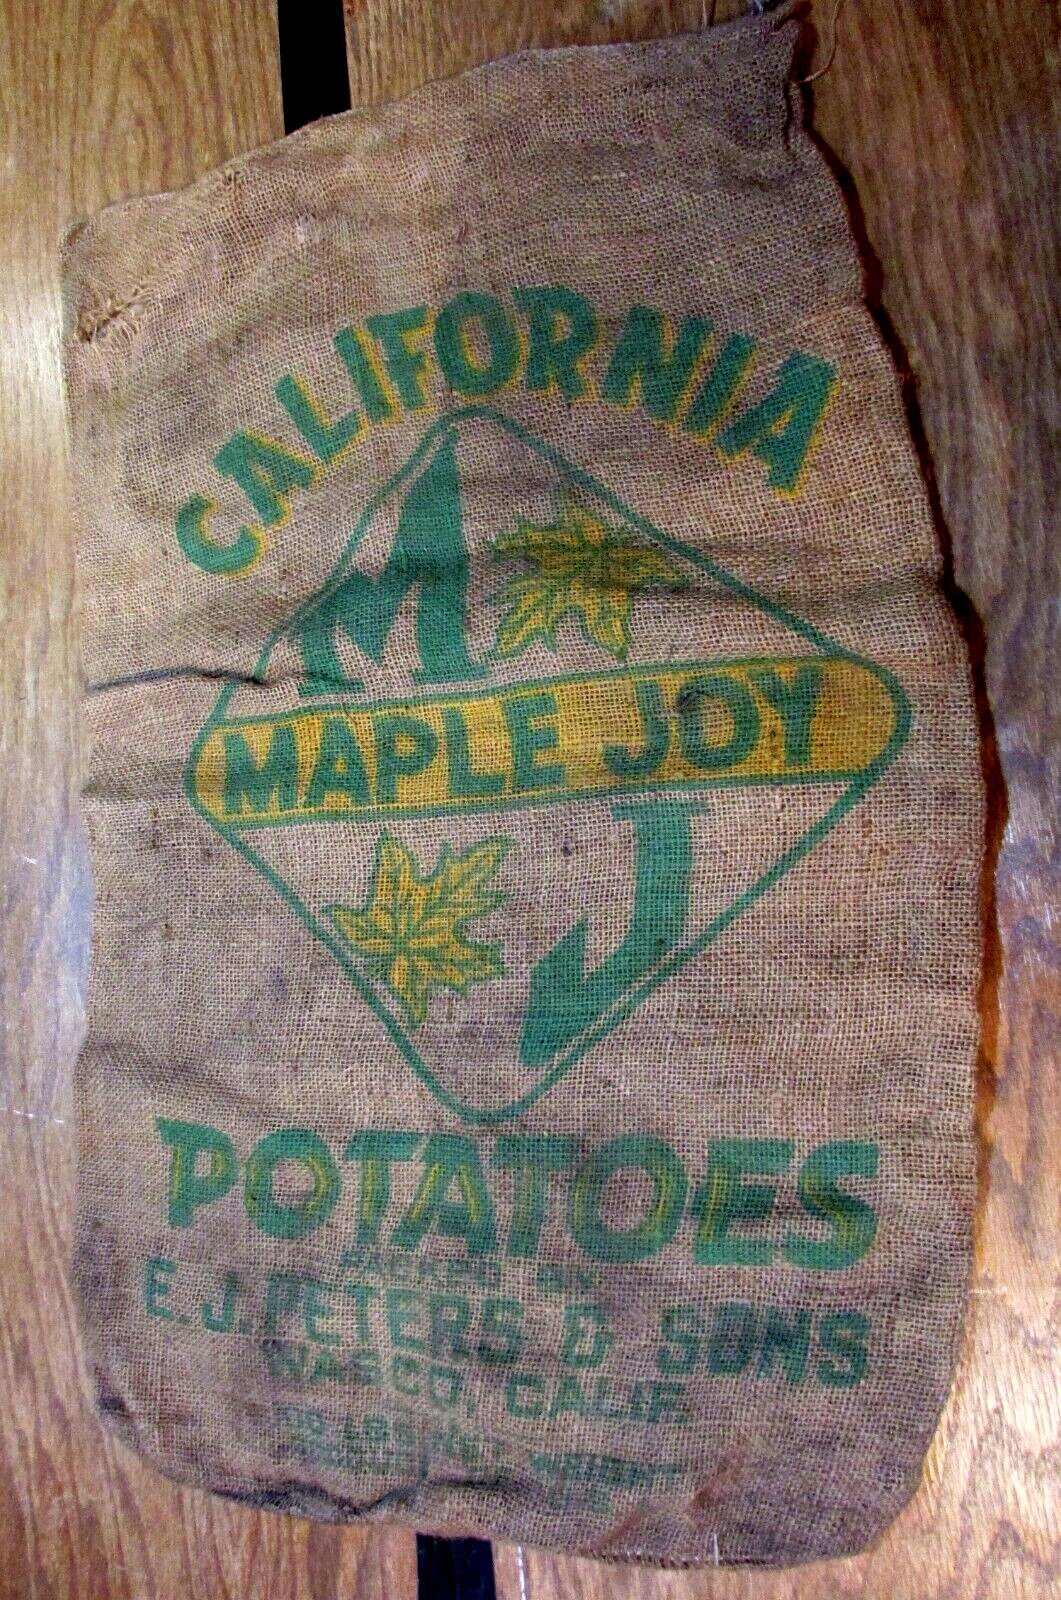 Peters Sons Maple Joy Wasco CA California Potato Sack Old 100 lb Size Burlap Bag